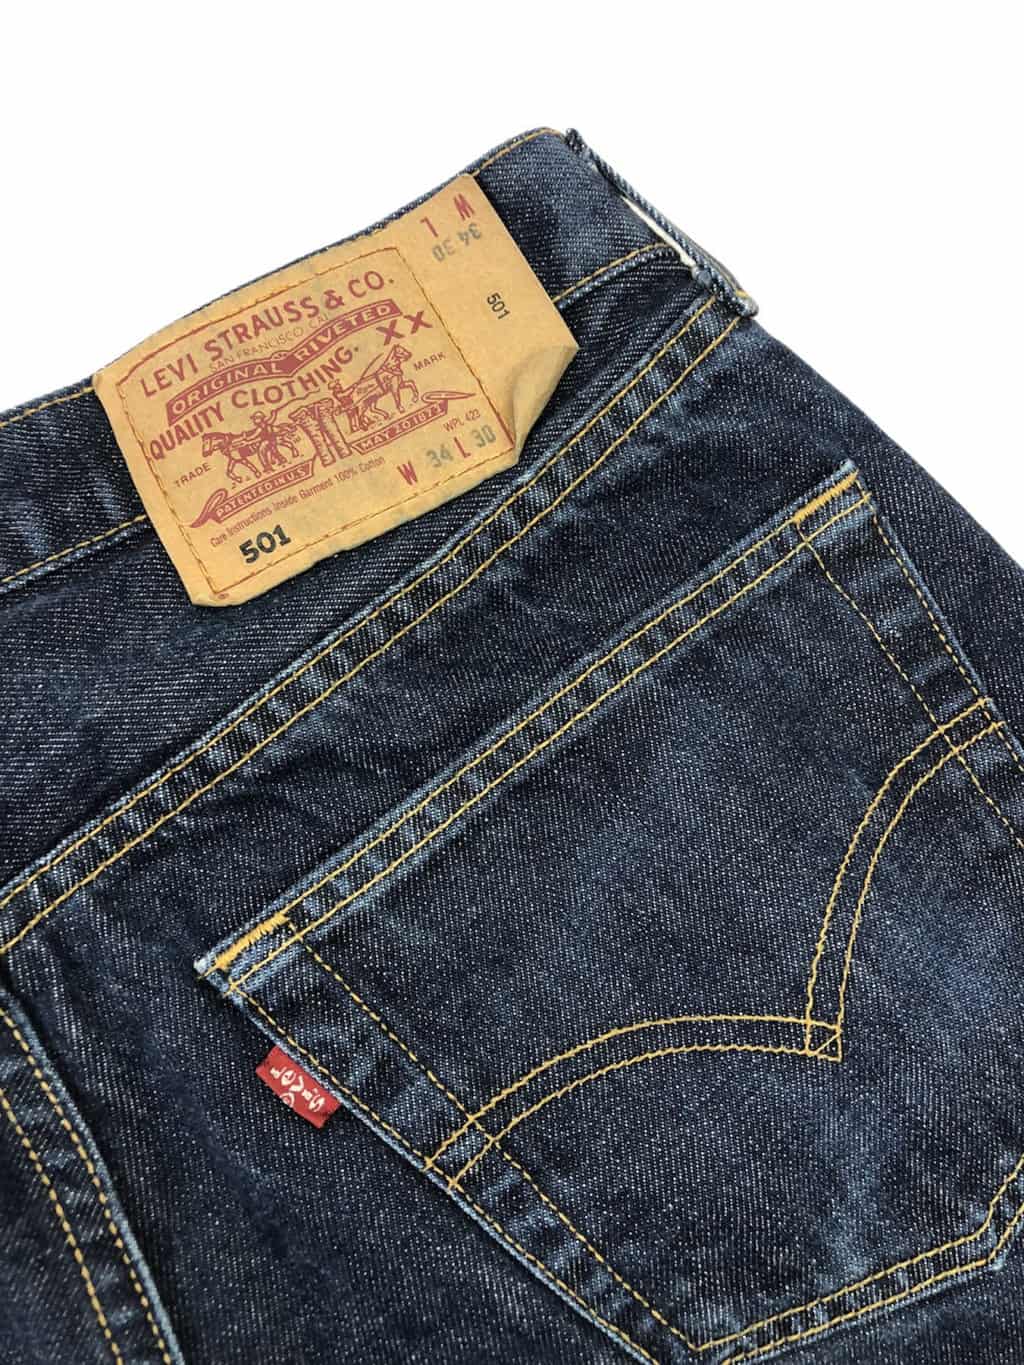 Y2K Dark Wash Mid Rise 501s Levis Jeans in Deep Navy Blue Denim - W33 x L26  - St Cyr Vintage